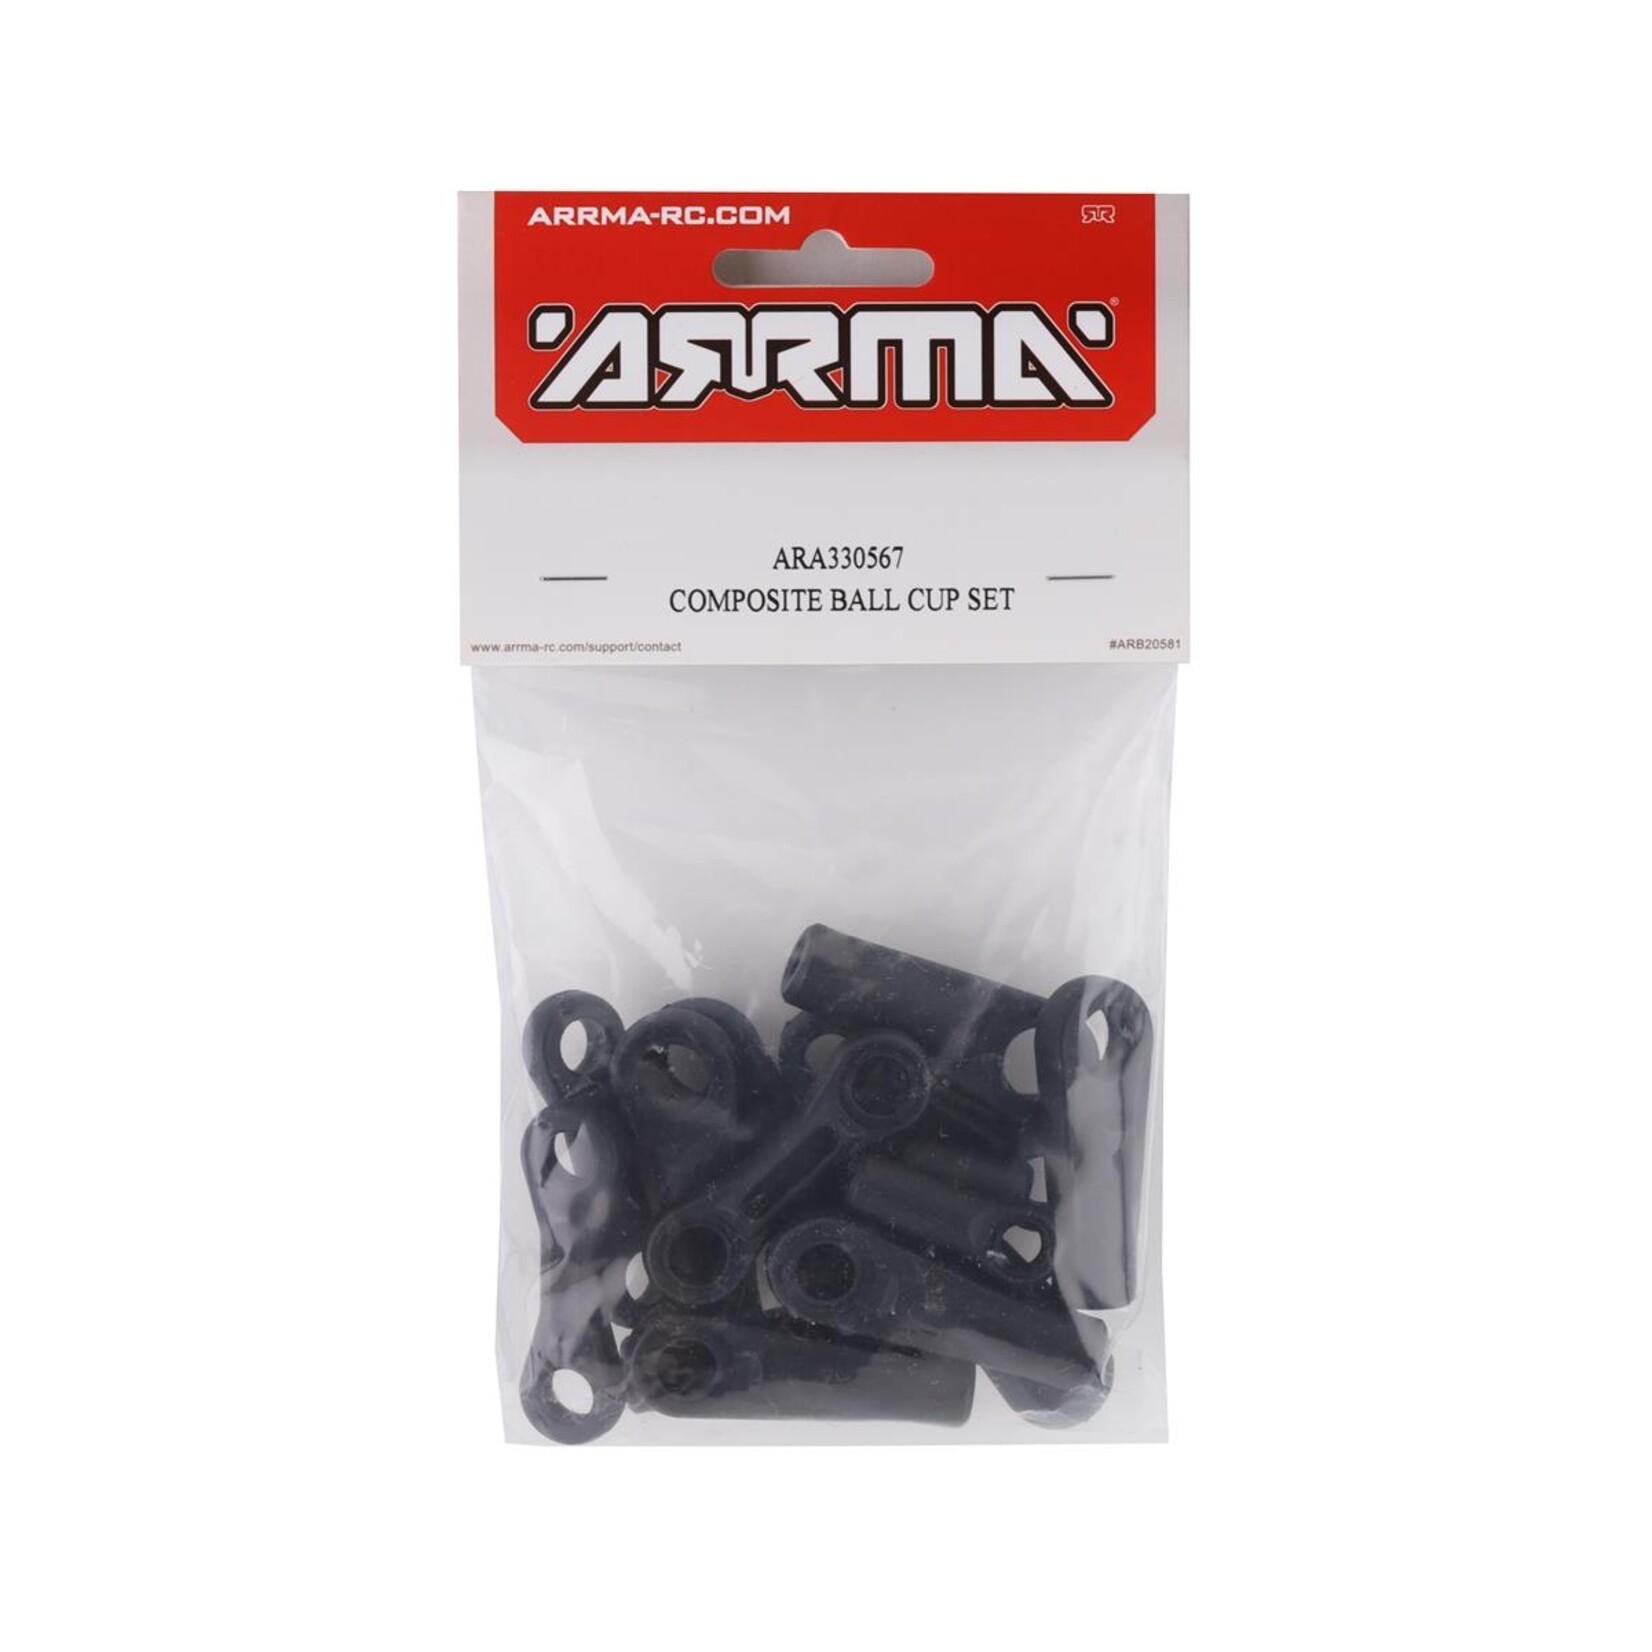 ARRMA Arrma 8S BLX Composite Ball Cup Set #ARA330567